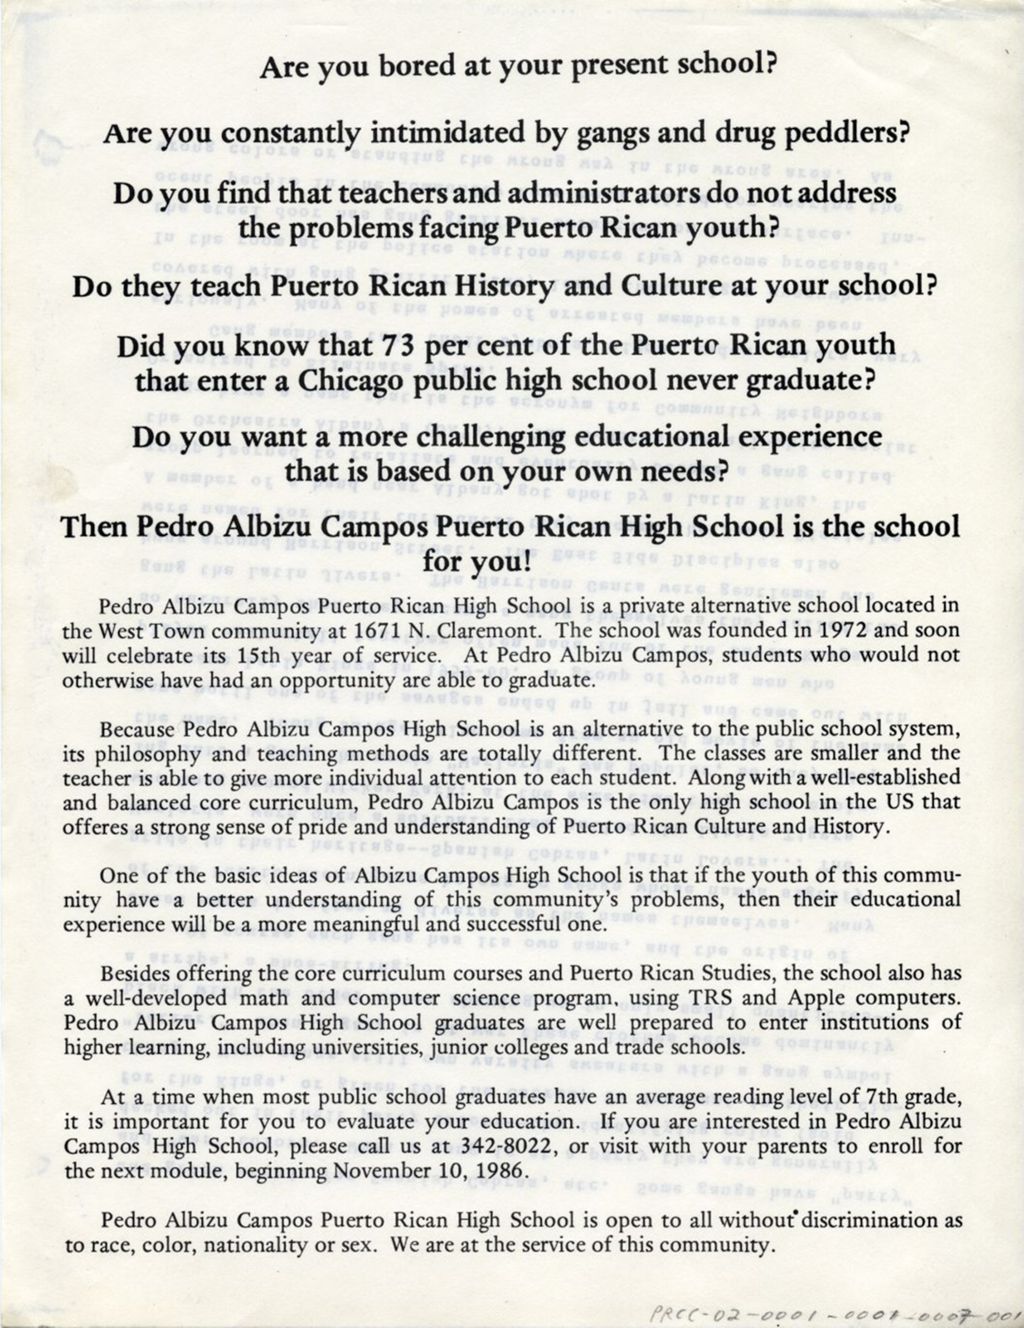 Miniature of Pedro Albizu Campos Puerto Rican High School Announcement